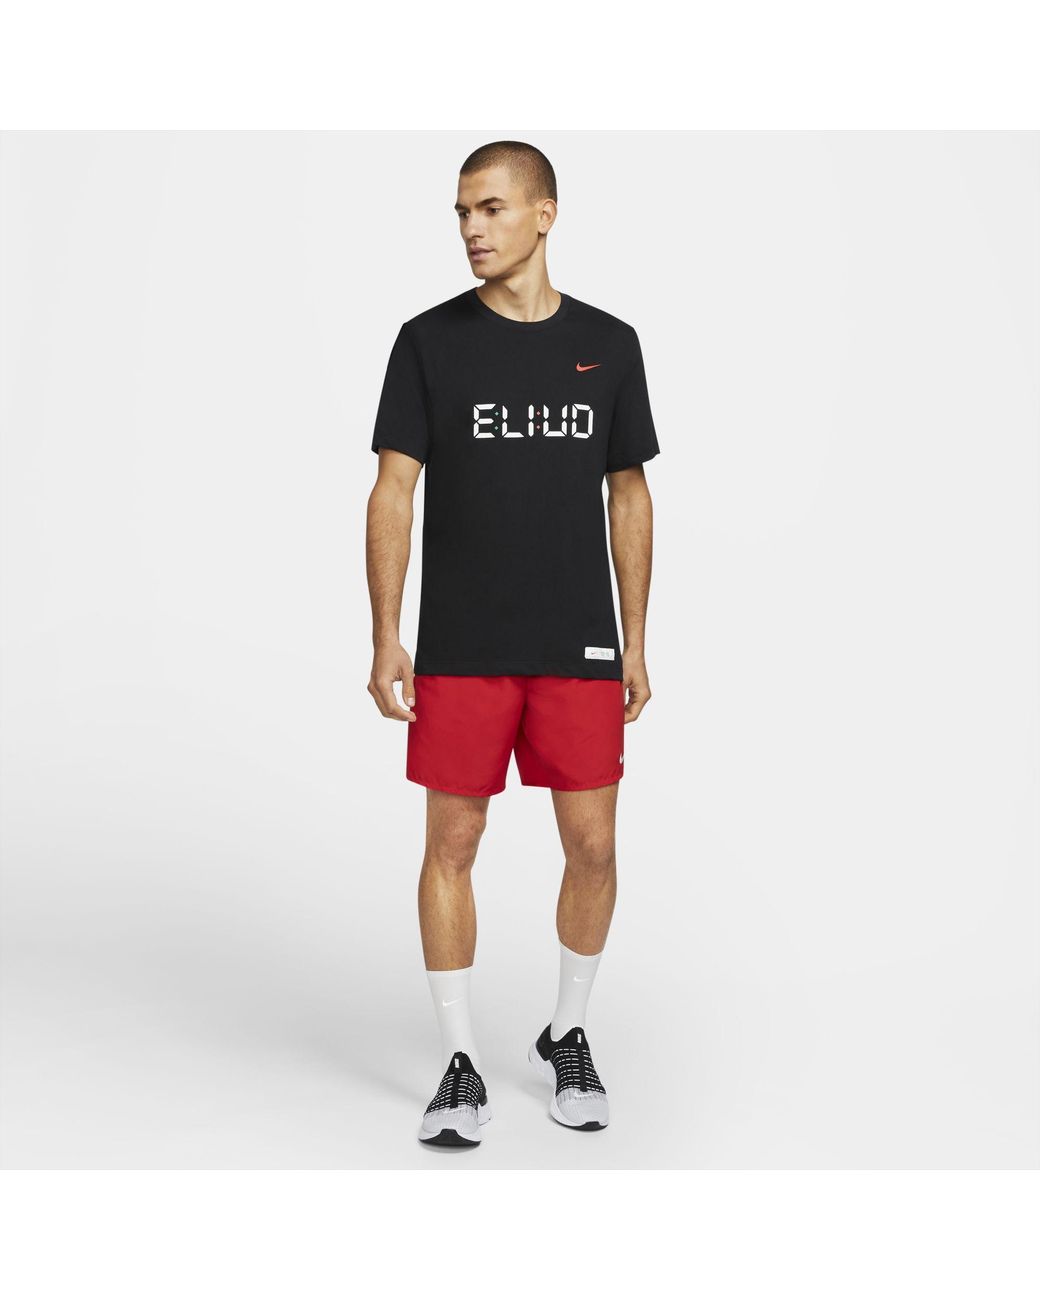 Nike Dri-fit Eliud Running T-shirt Black for Men | Lyst UK